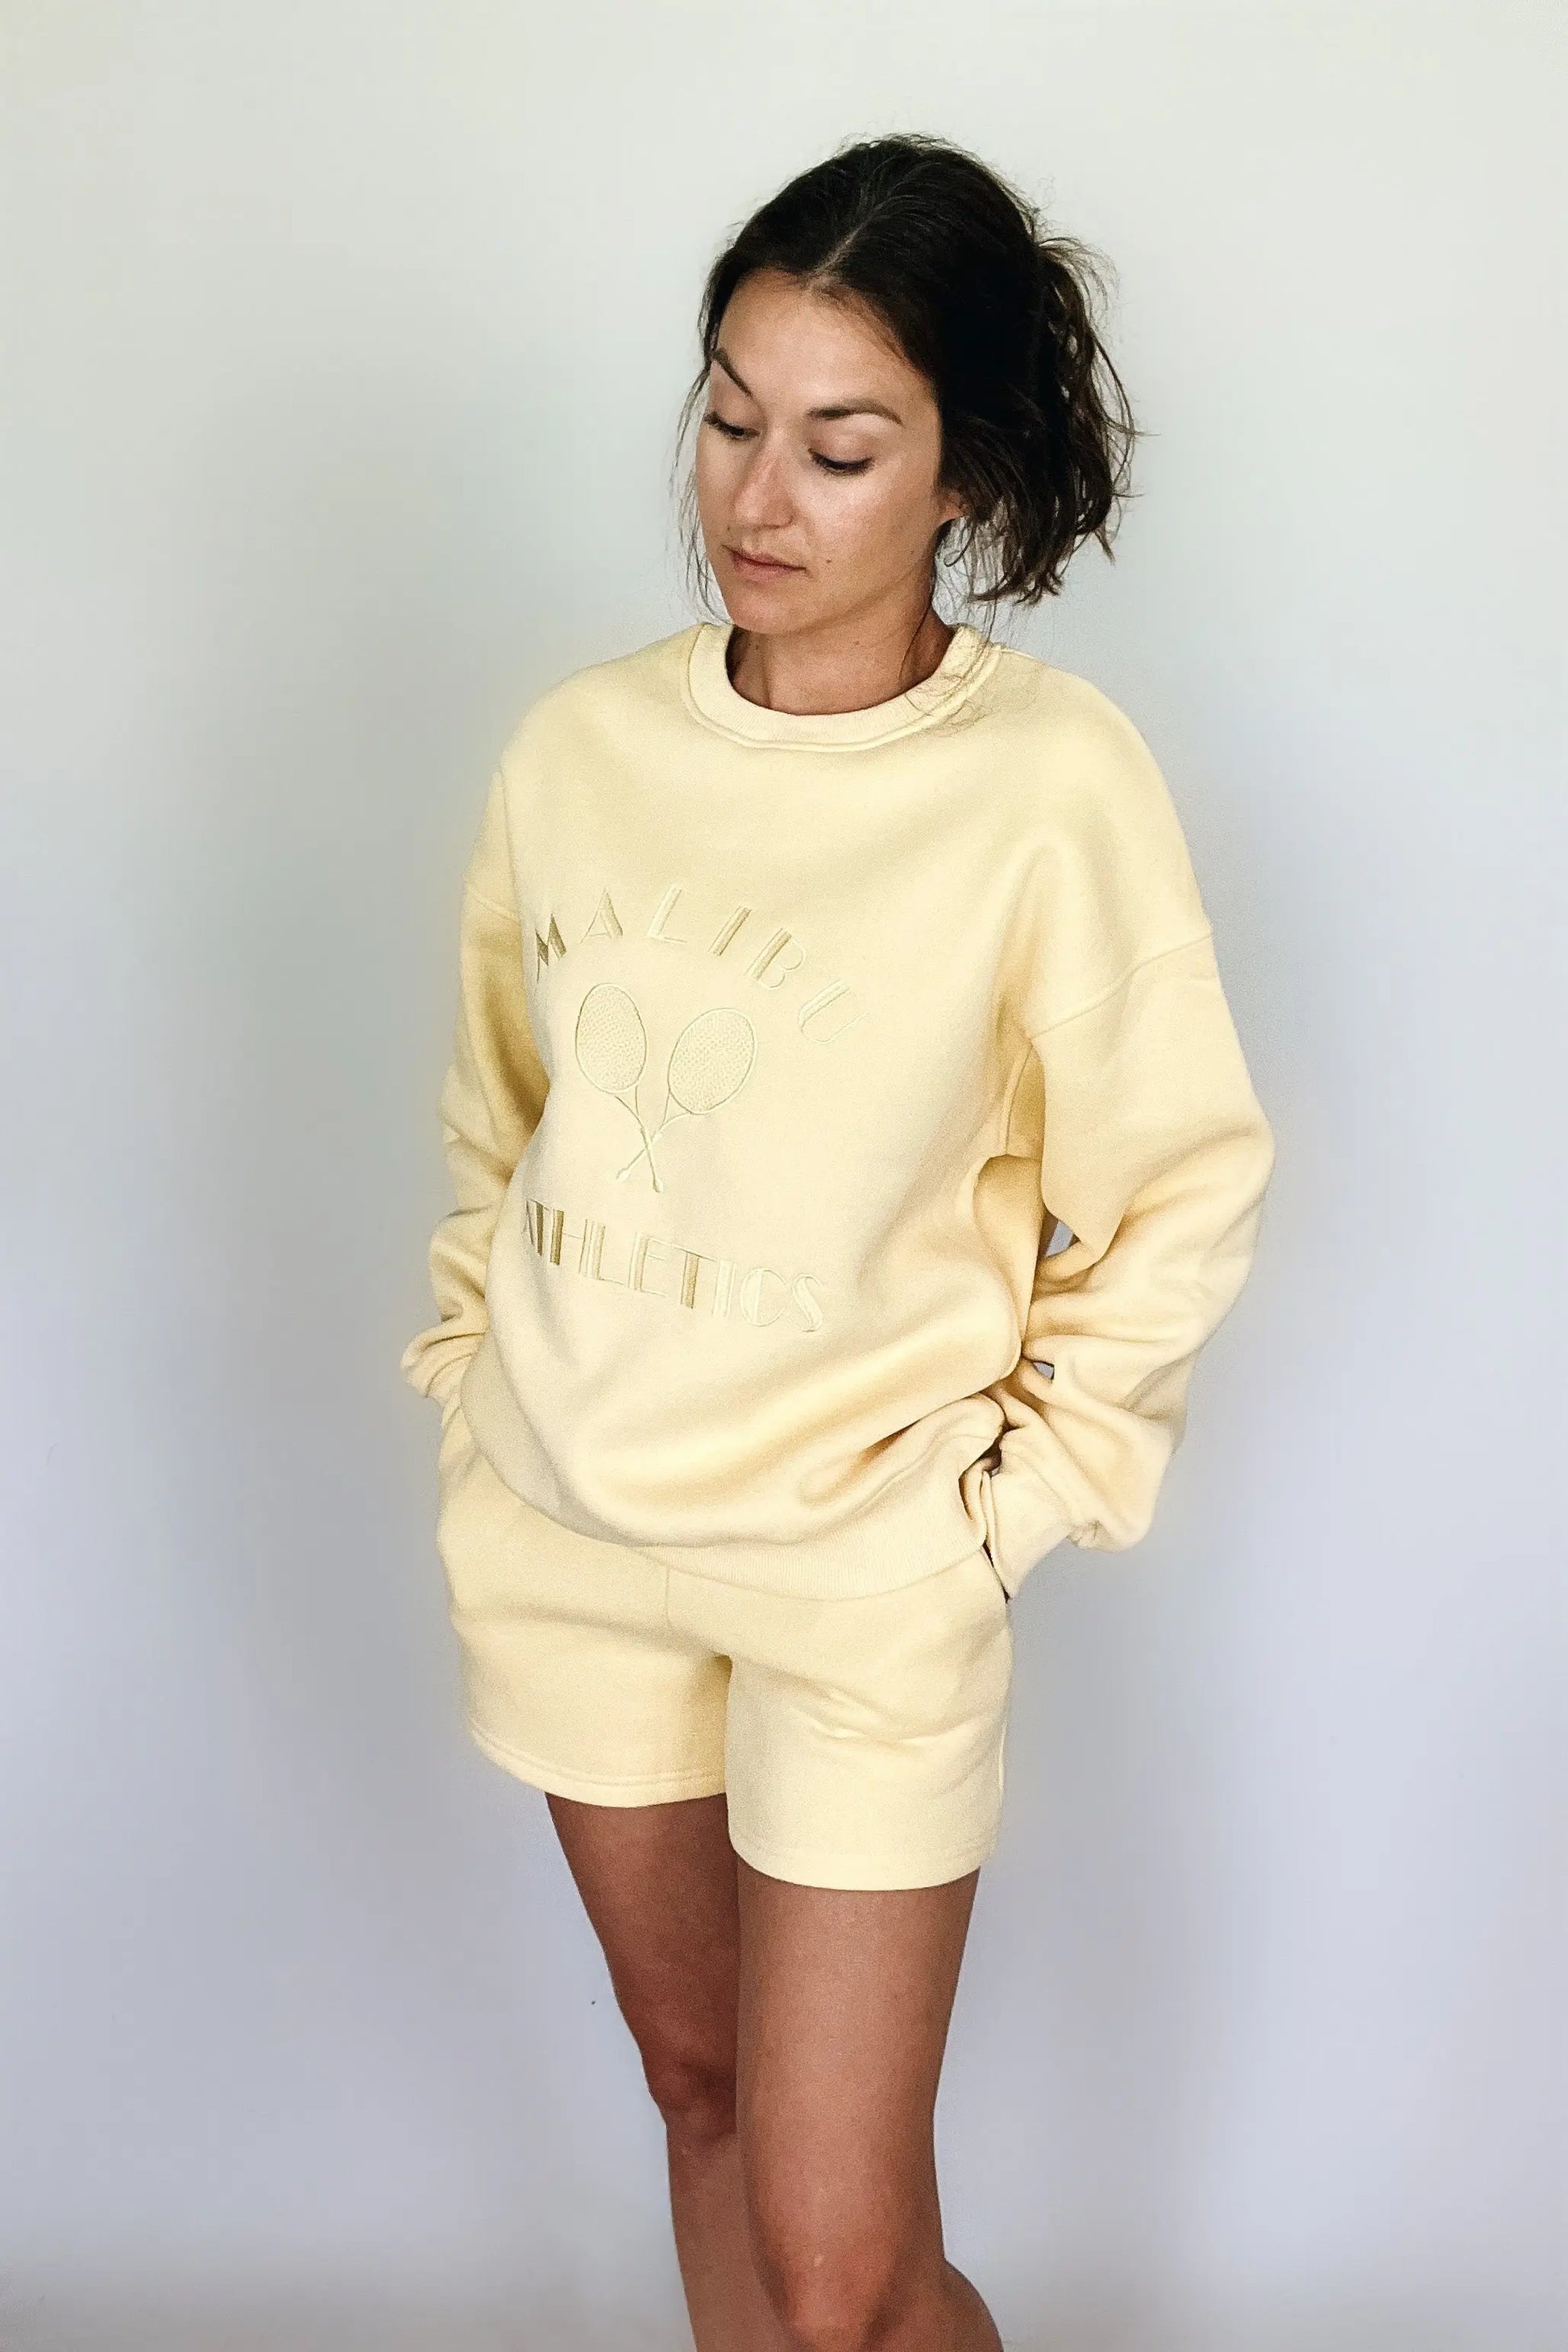 The Tiny Details modeling the Malibu Athletics Yellow Pullover Sweatshirt